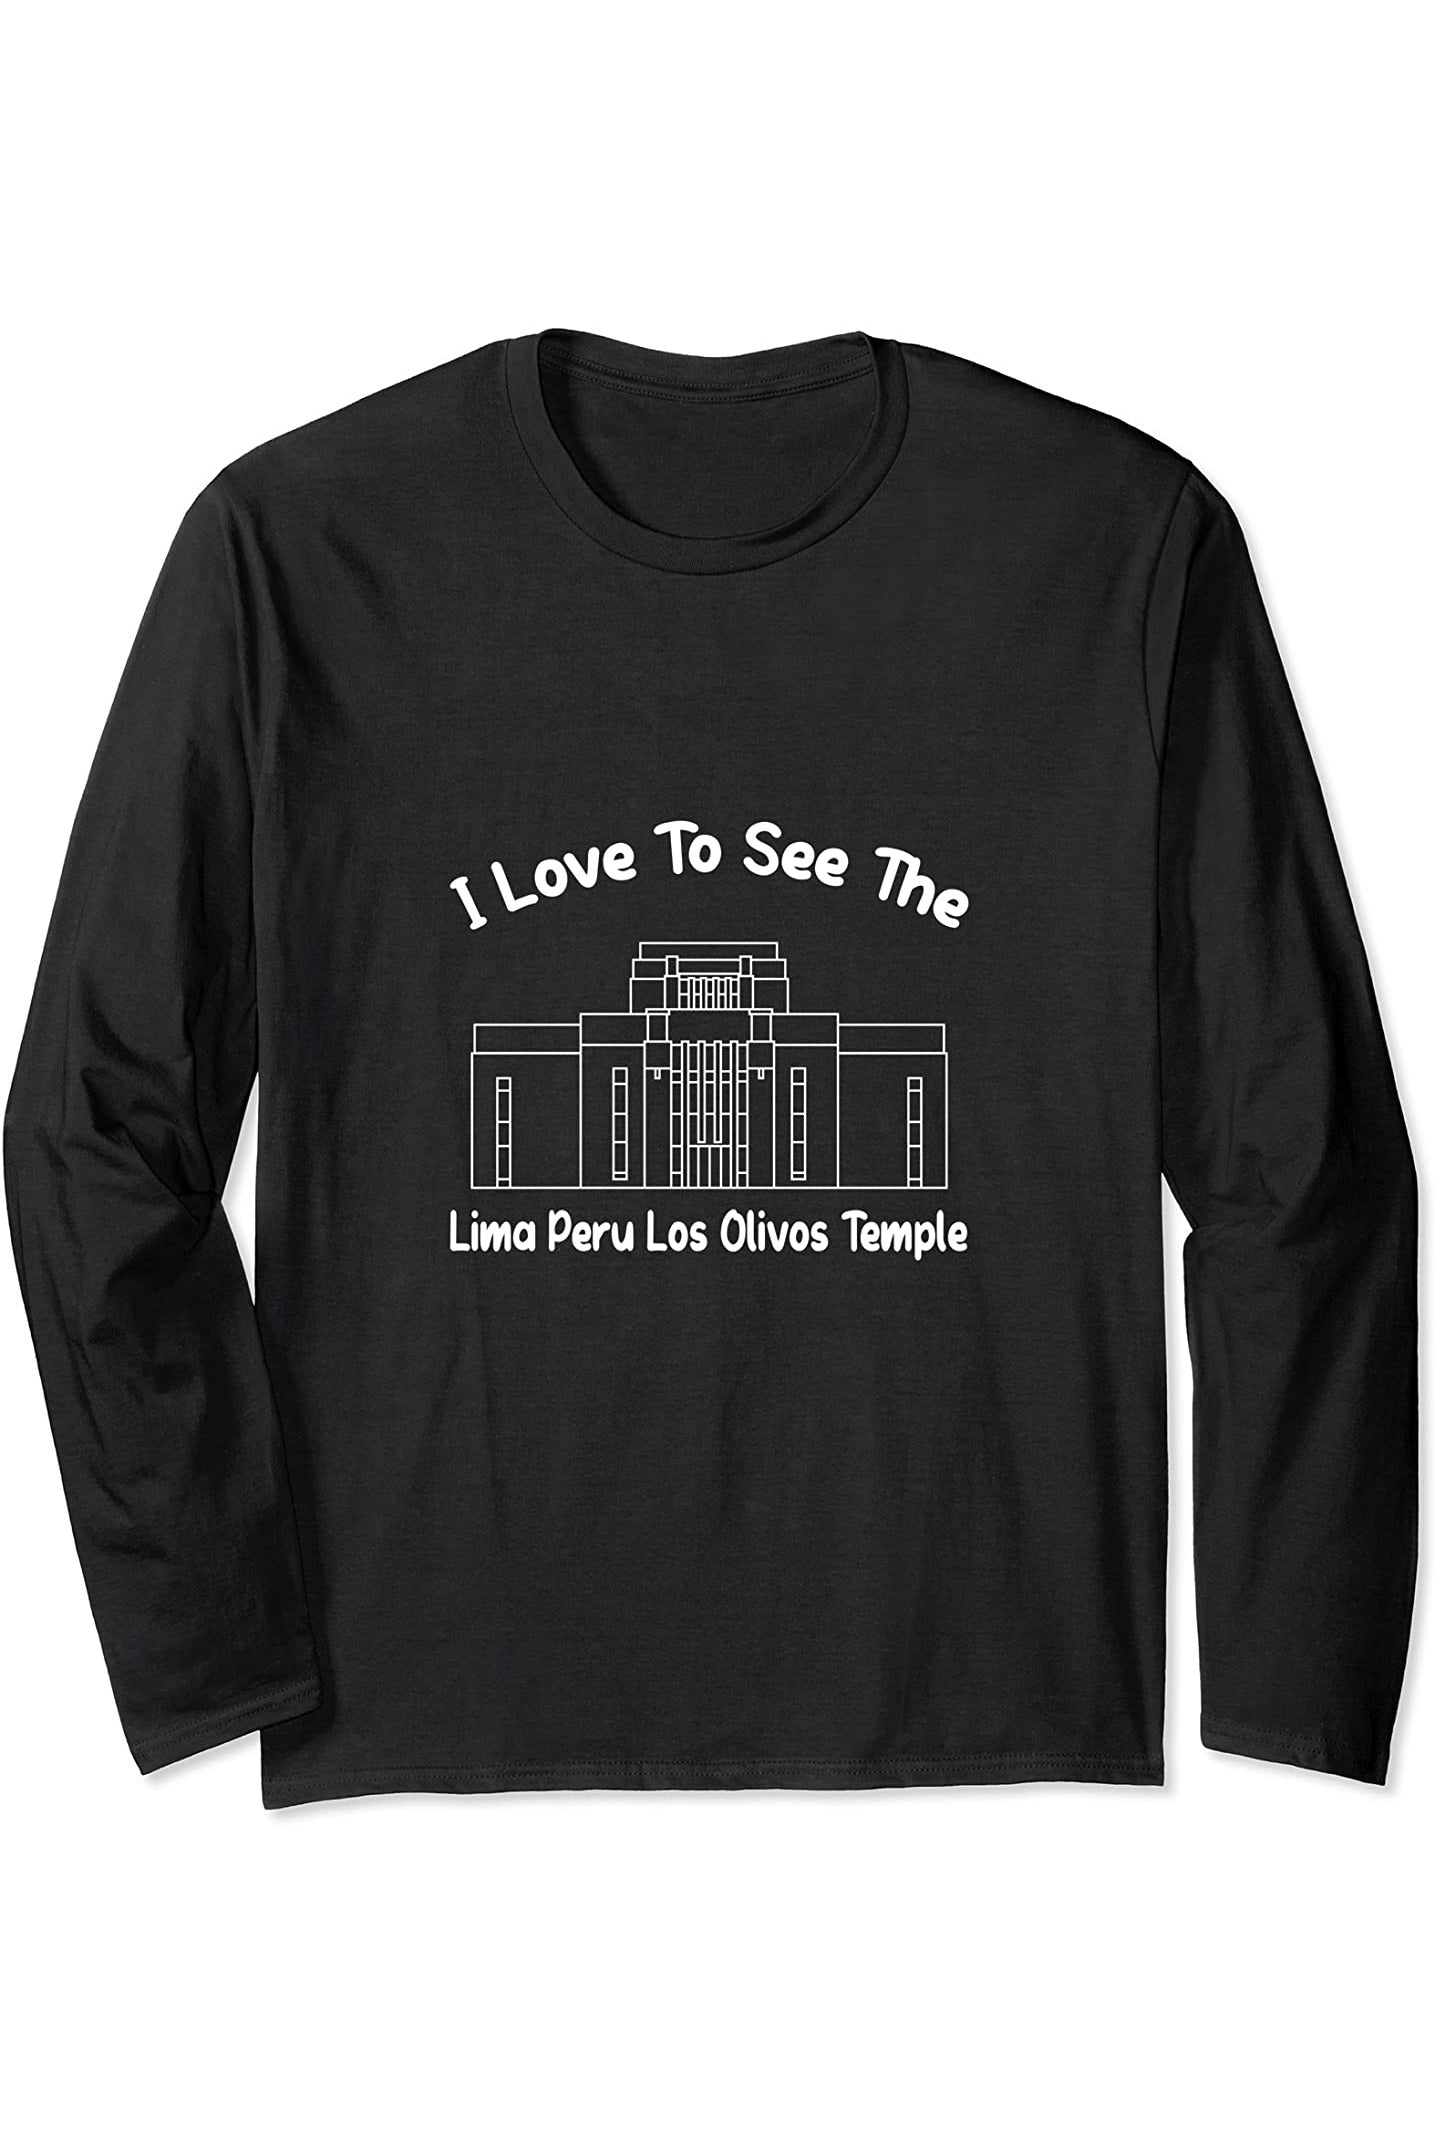 Lima Peru Los Olivos Temple Long Sleeve T-Shirt - Primary Style (English) US